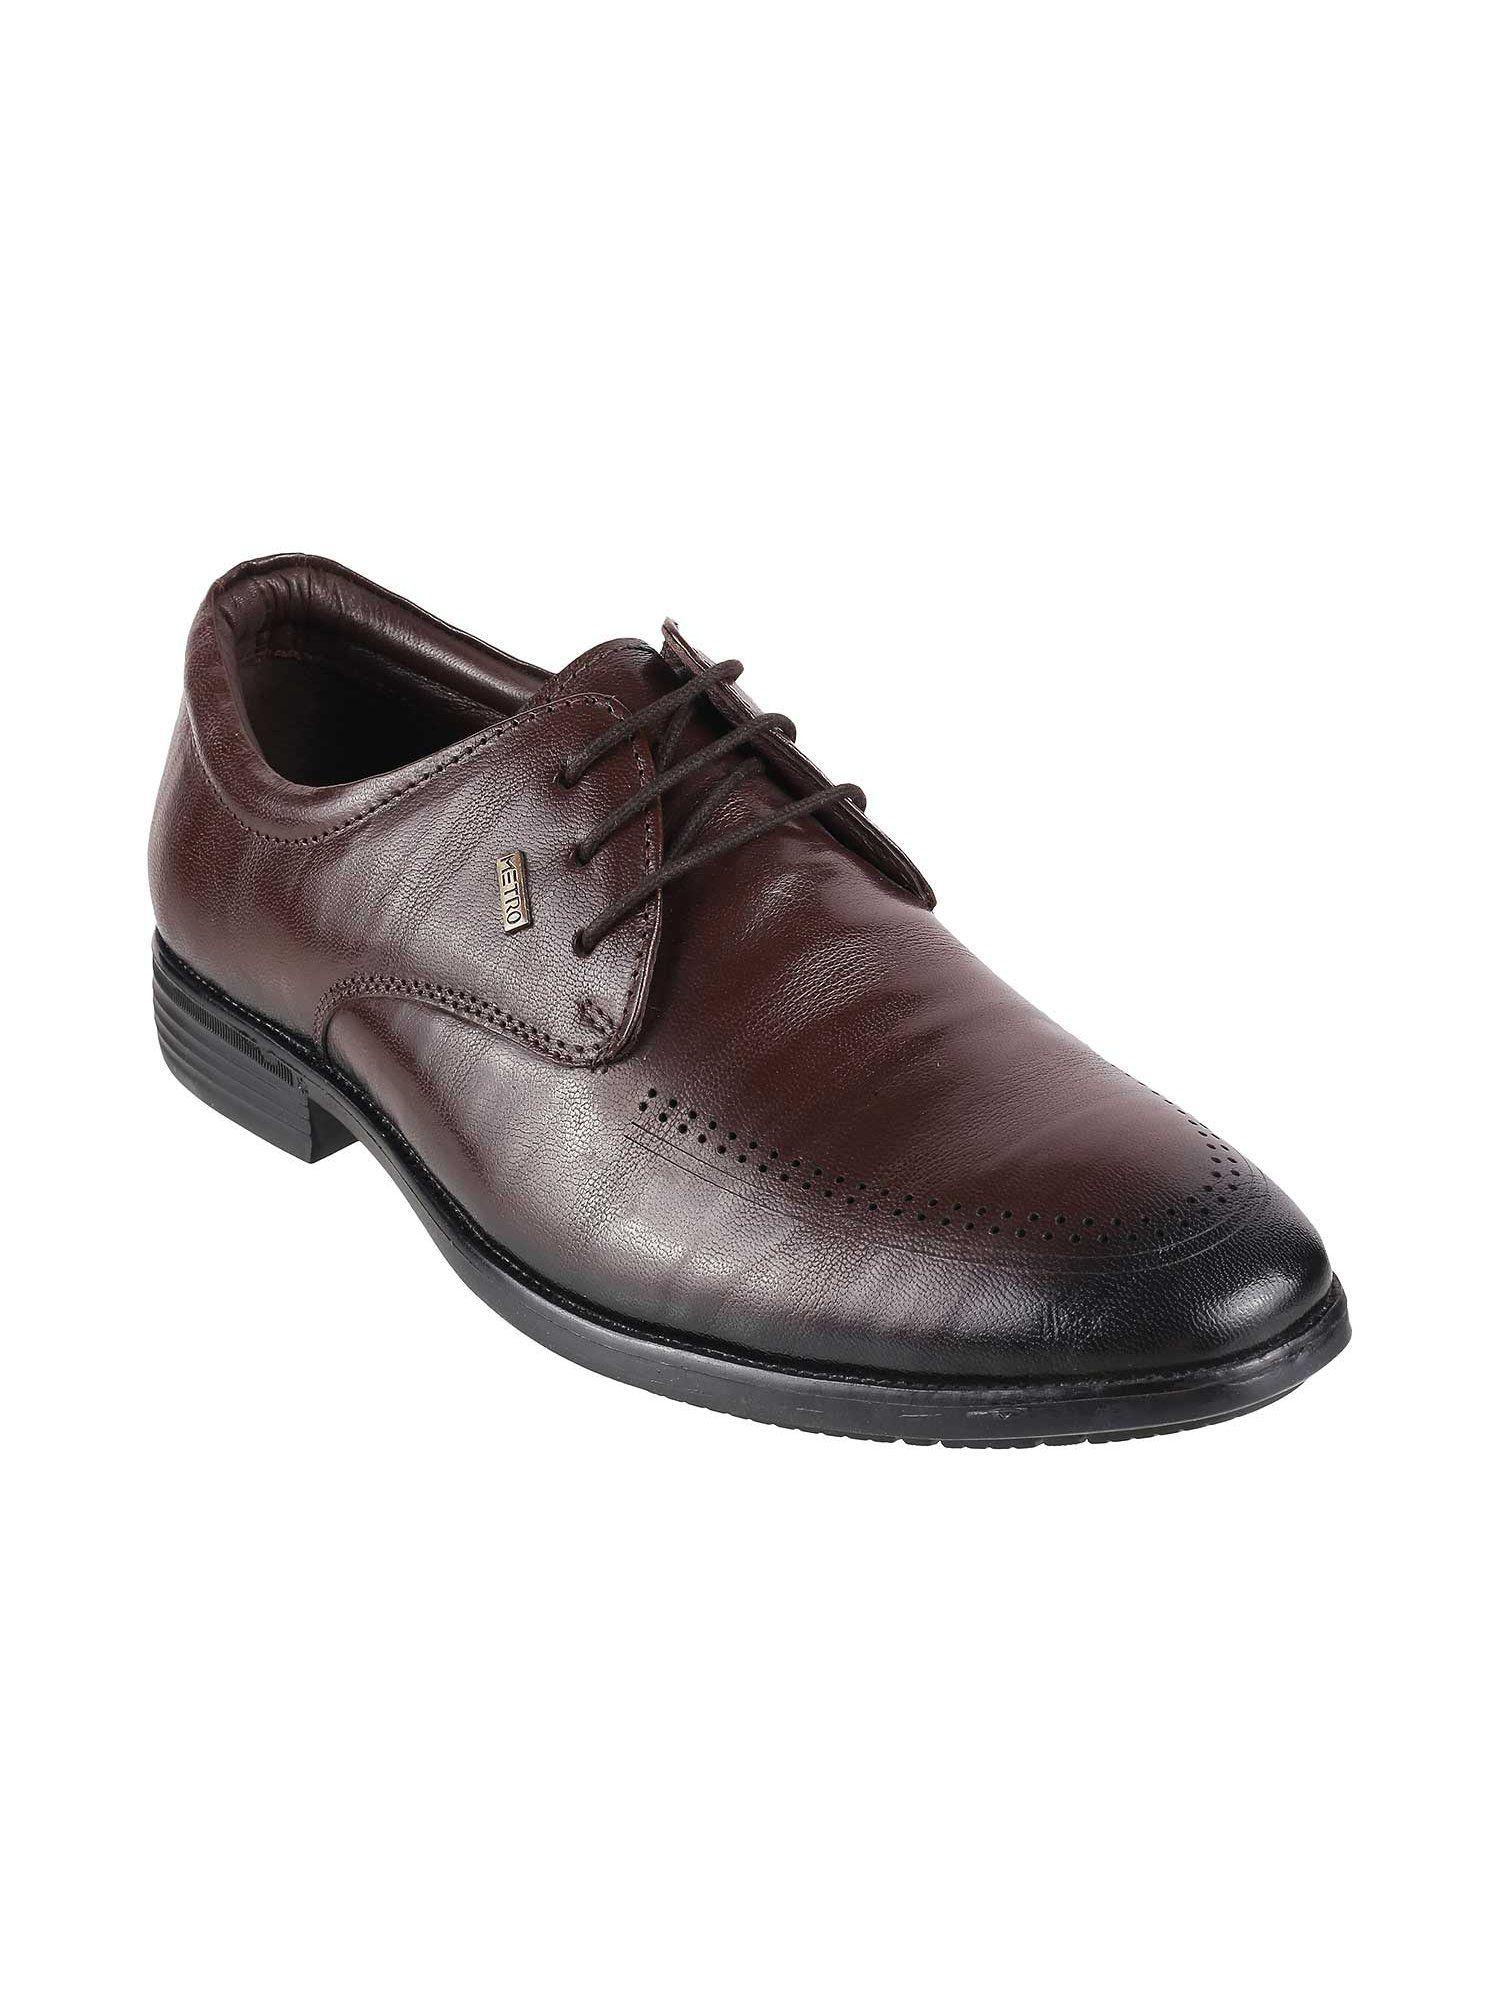 metro-mens-brown-formal-lace-ups-shoesmochi-plain-brown-lace-ups-shoes